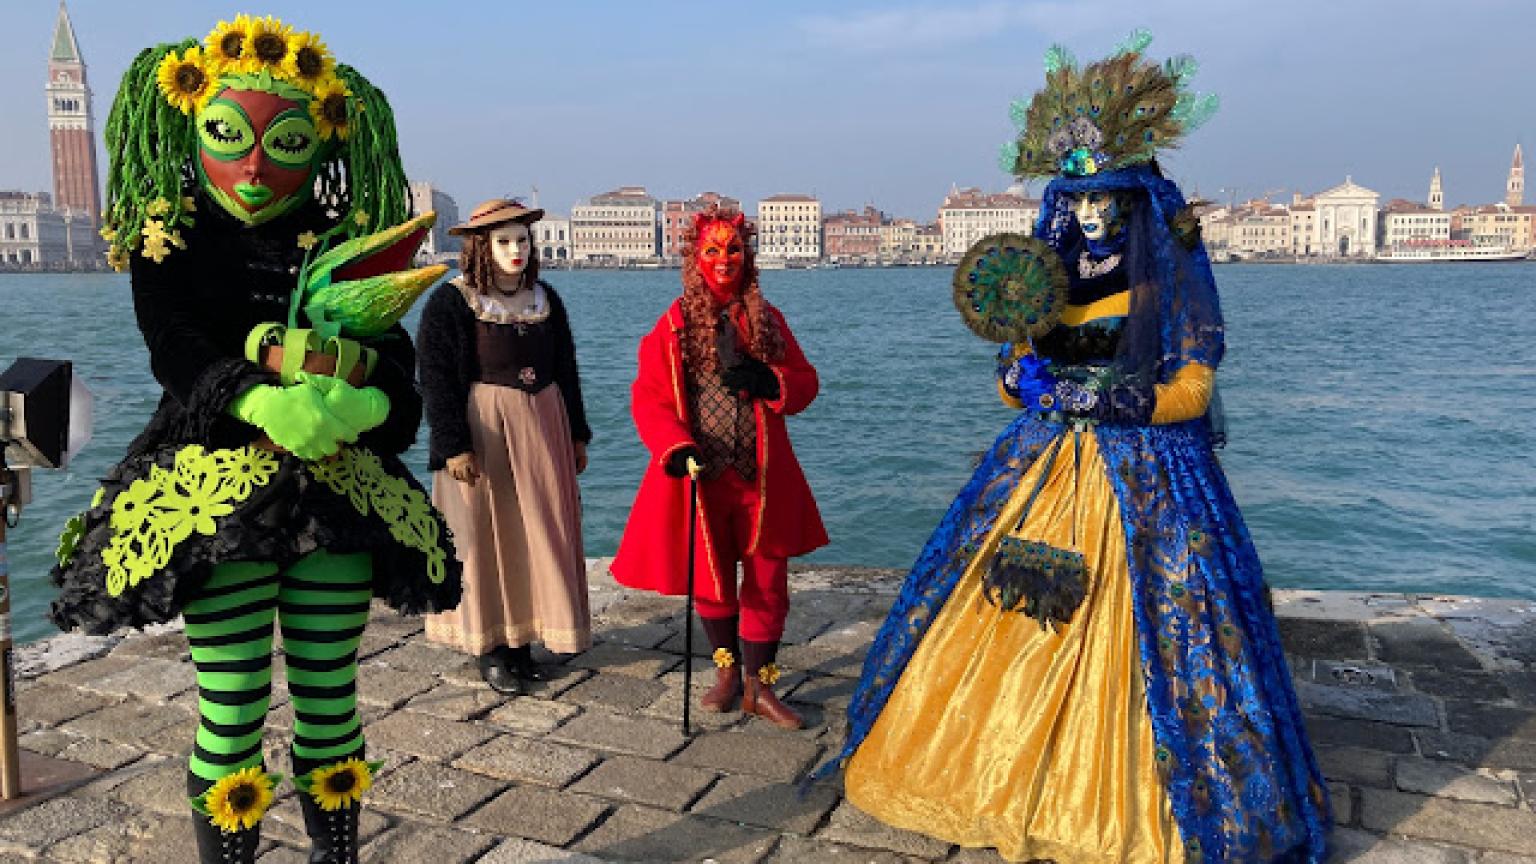 Carnivale costumes in Venice.